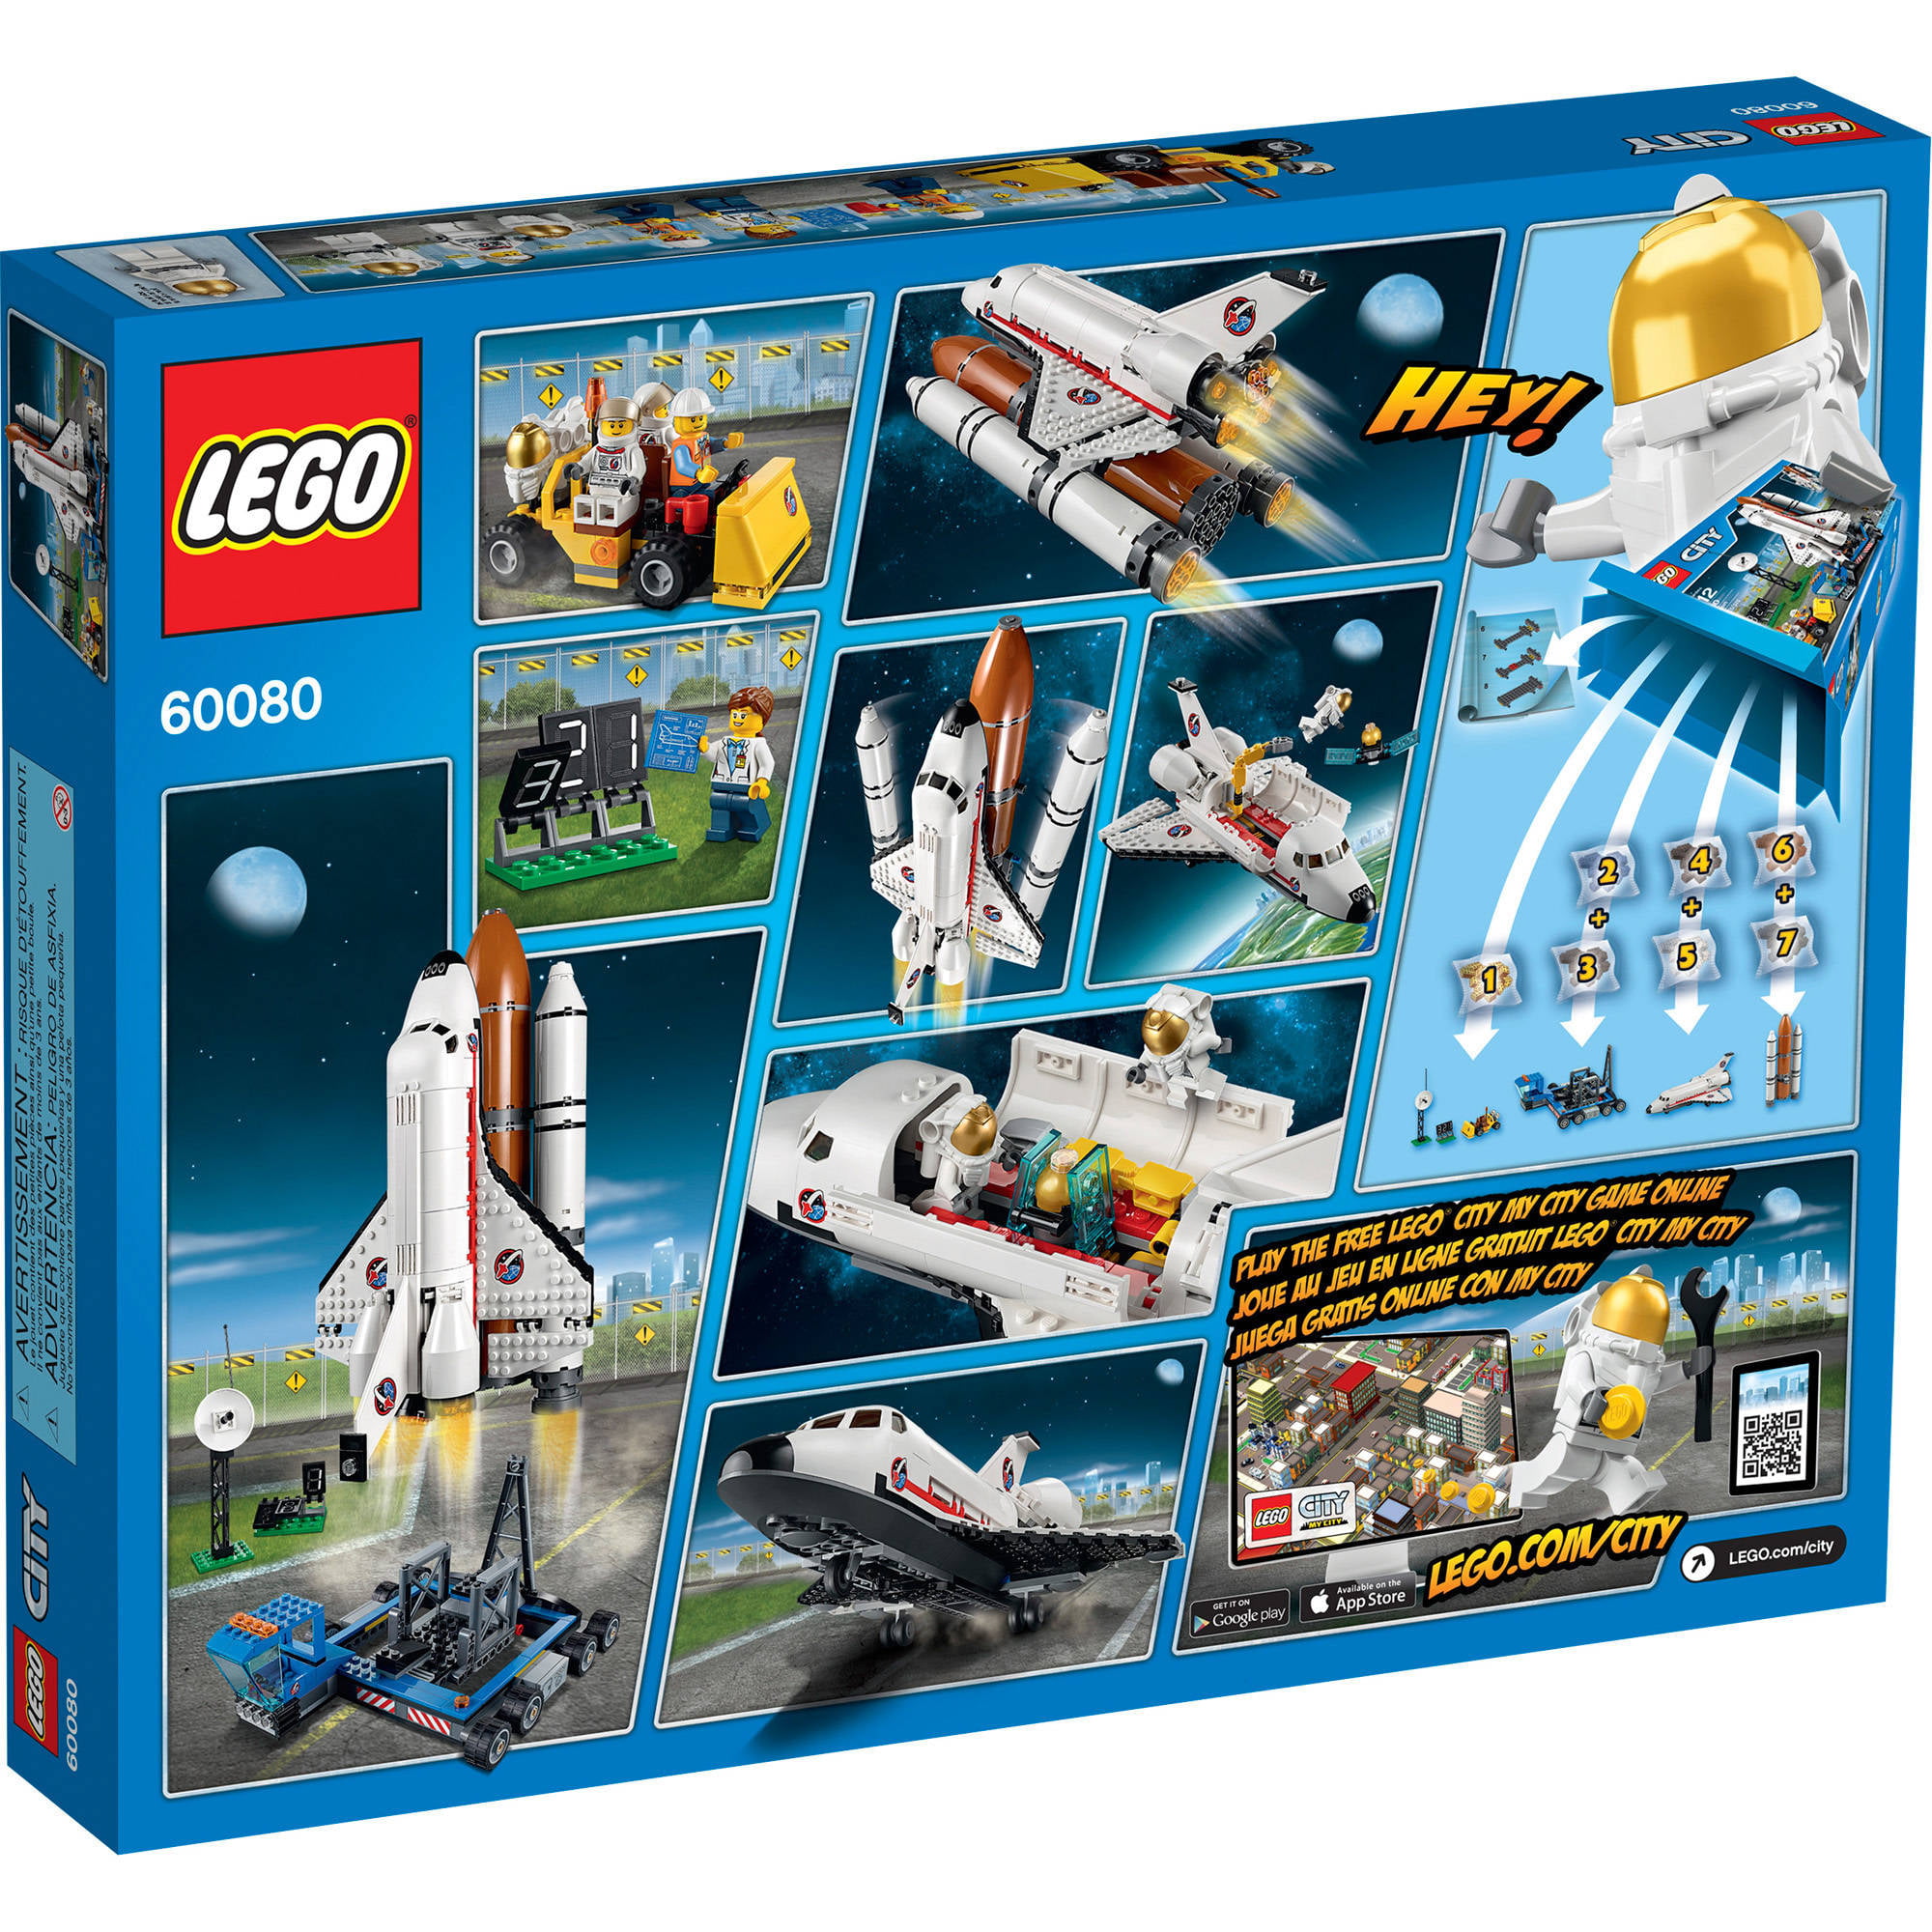 Cape Nemlig karakter LEGO City Space Port Spaceport, 60080 - Walmart.com